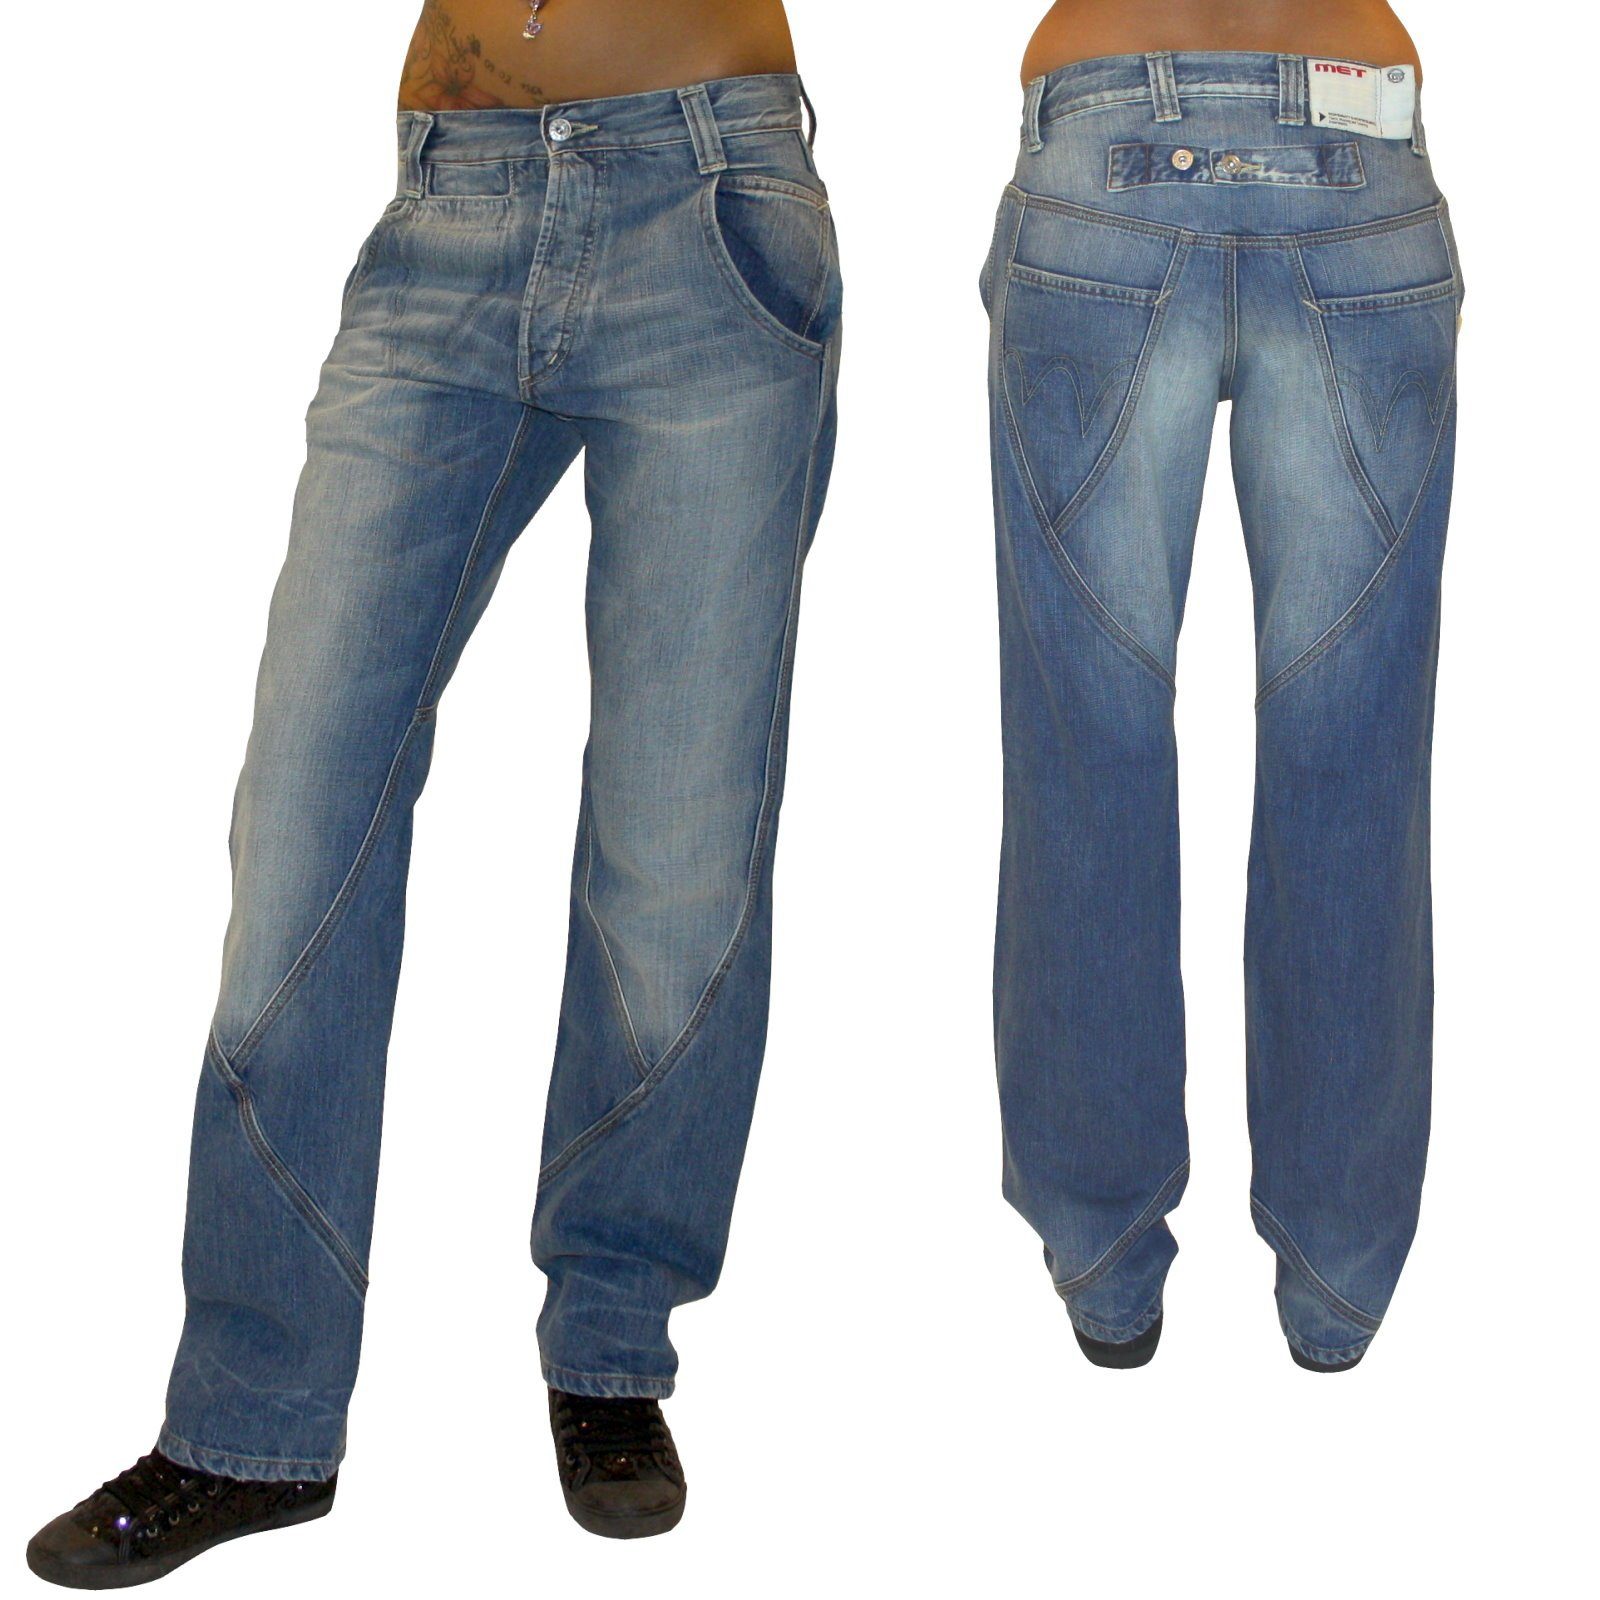 MET Jeans Boyfriend-Jeans Pantaloni Damen Jeans Pantaloni Jeanshose Baggy  Hip Hop Hose blau used mit Destroydeffekte